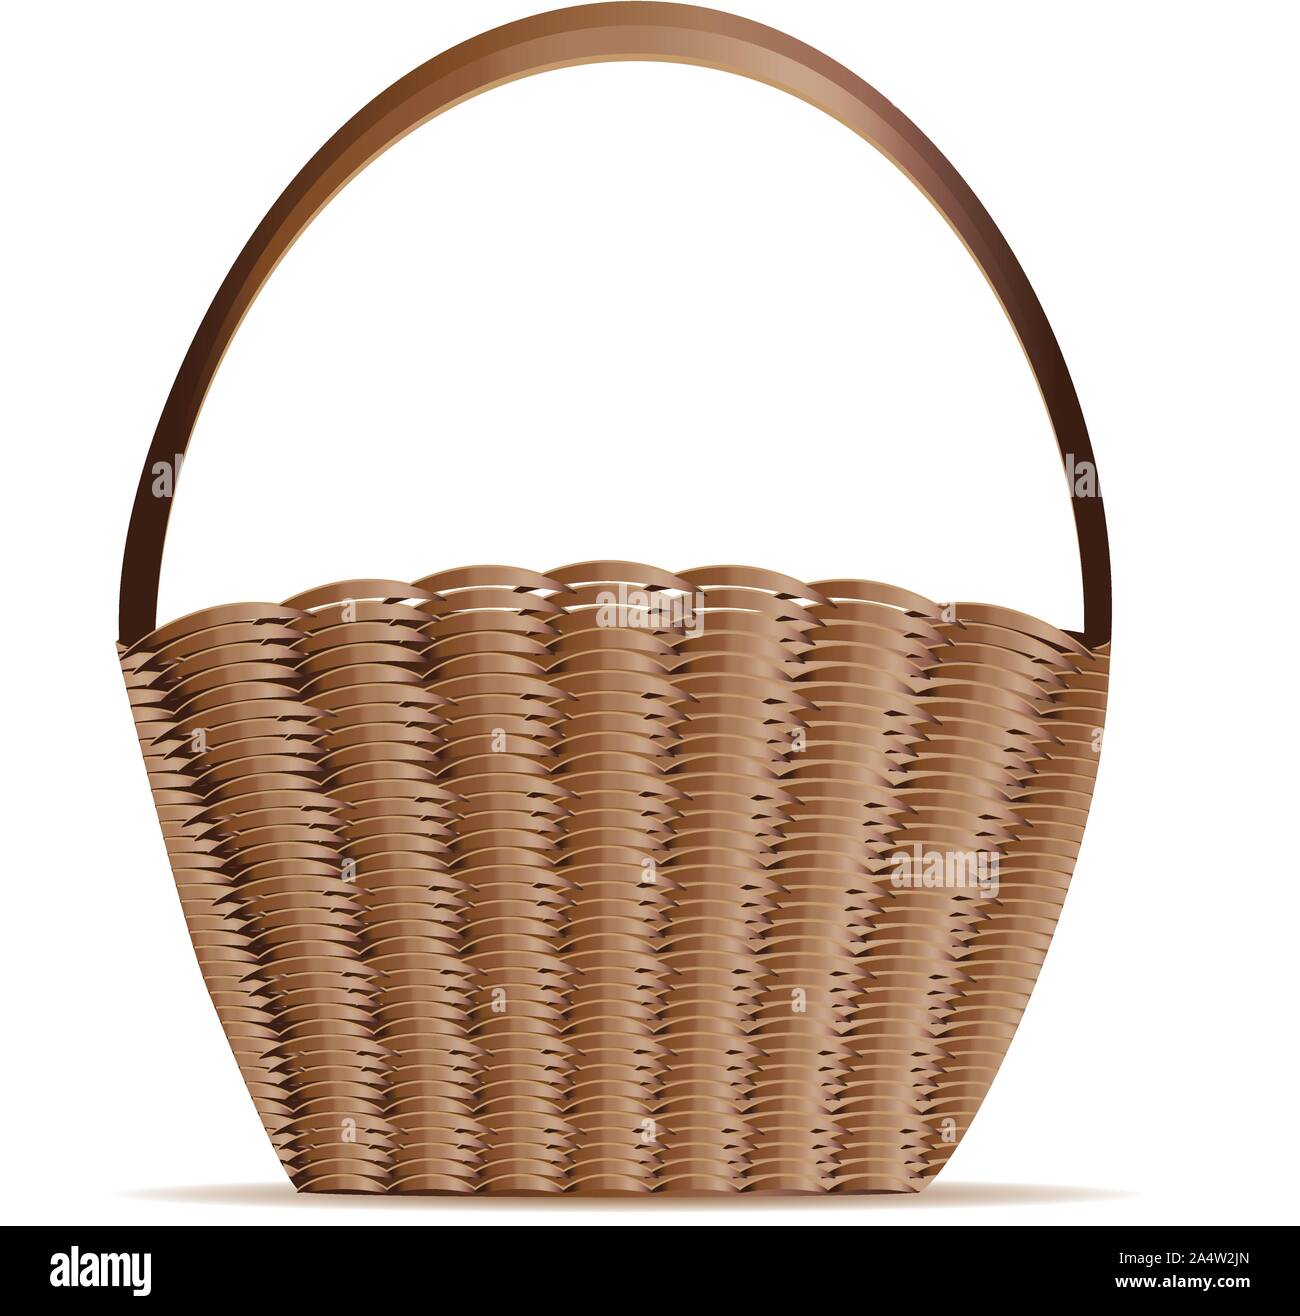 Illustration of empty woven basket on white background. Stock Vector